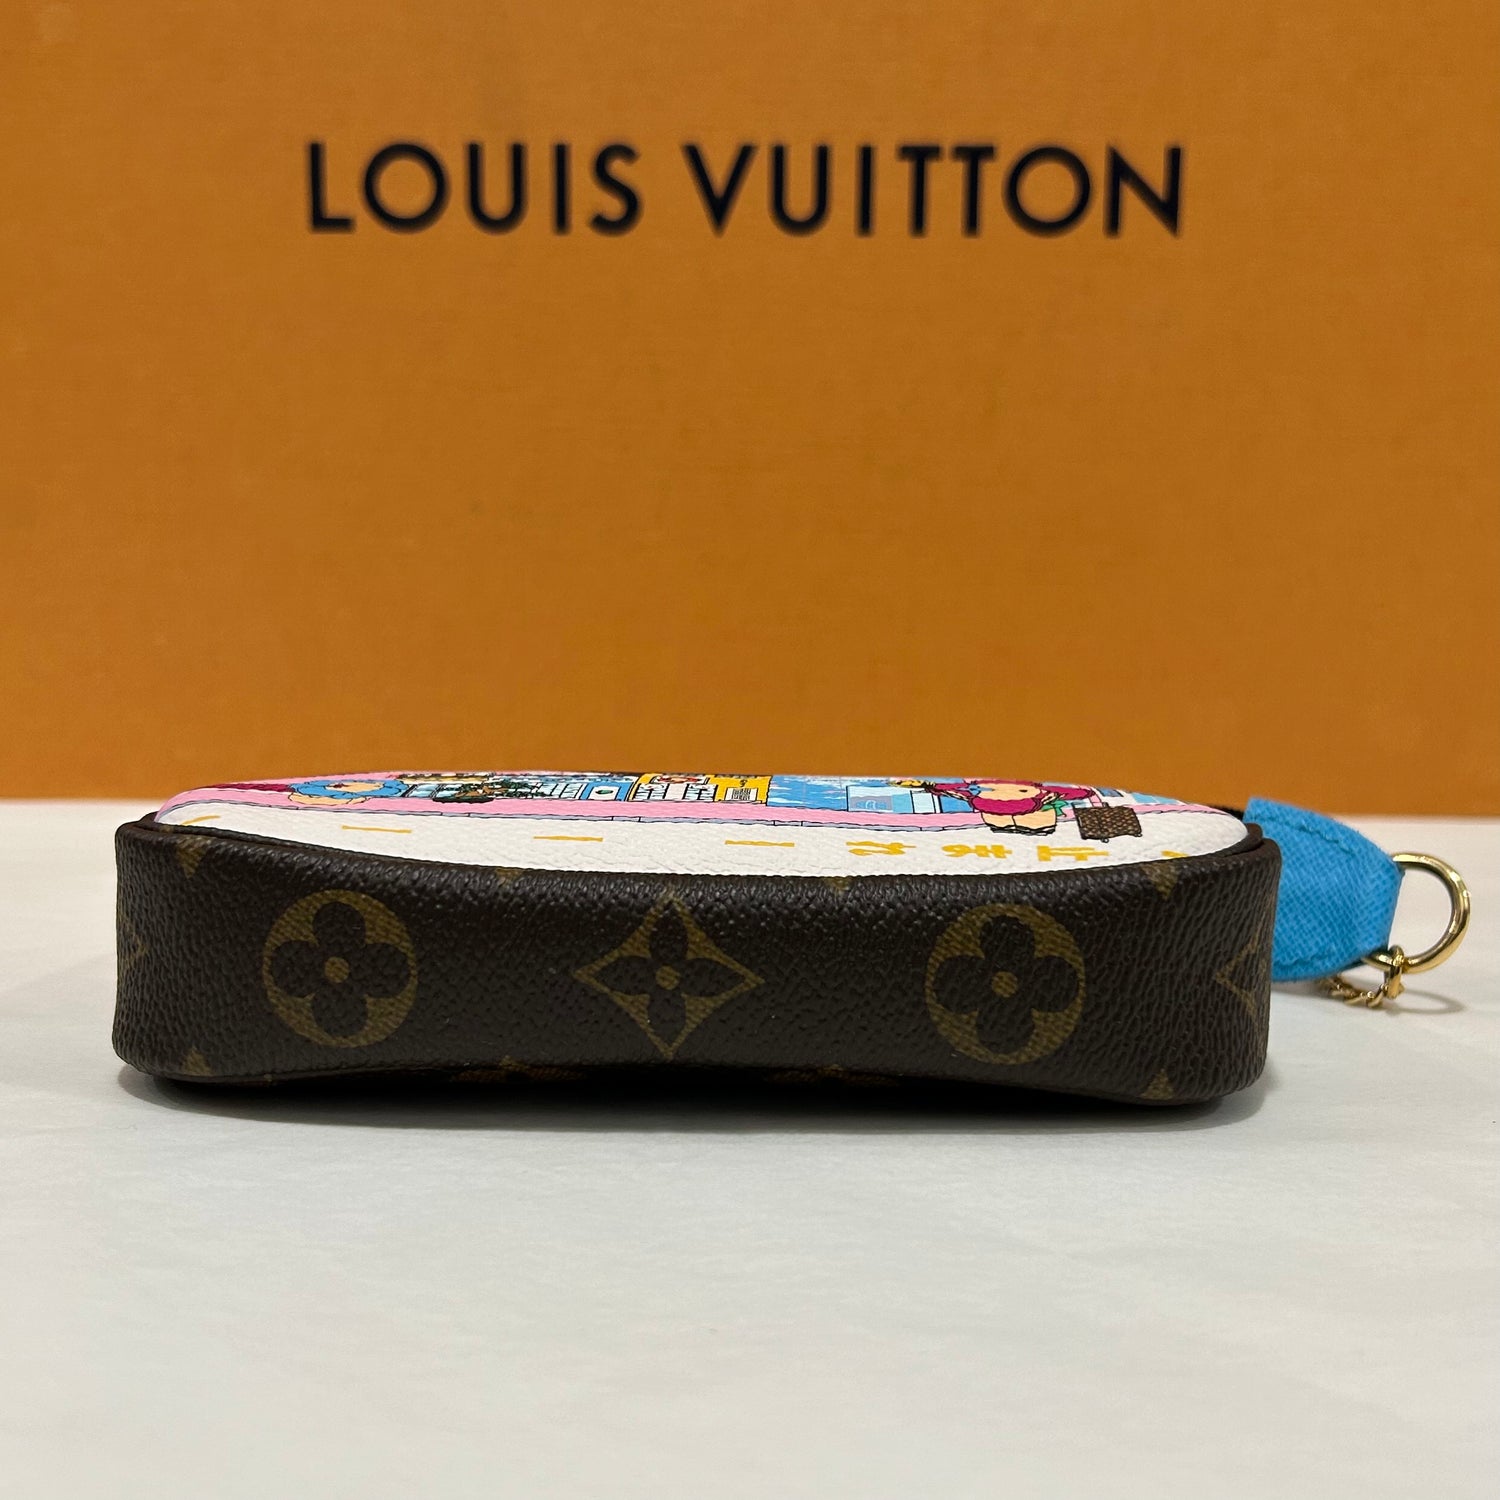 Louis Vuitton - Mini clutch